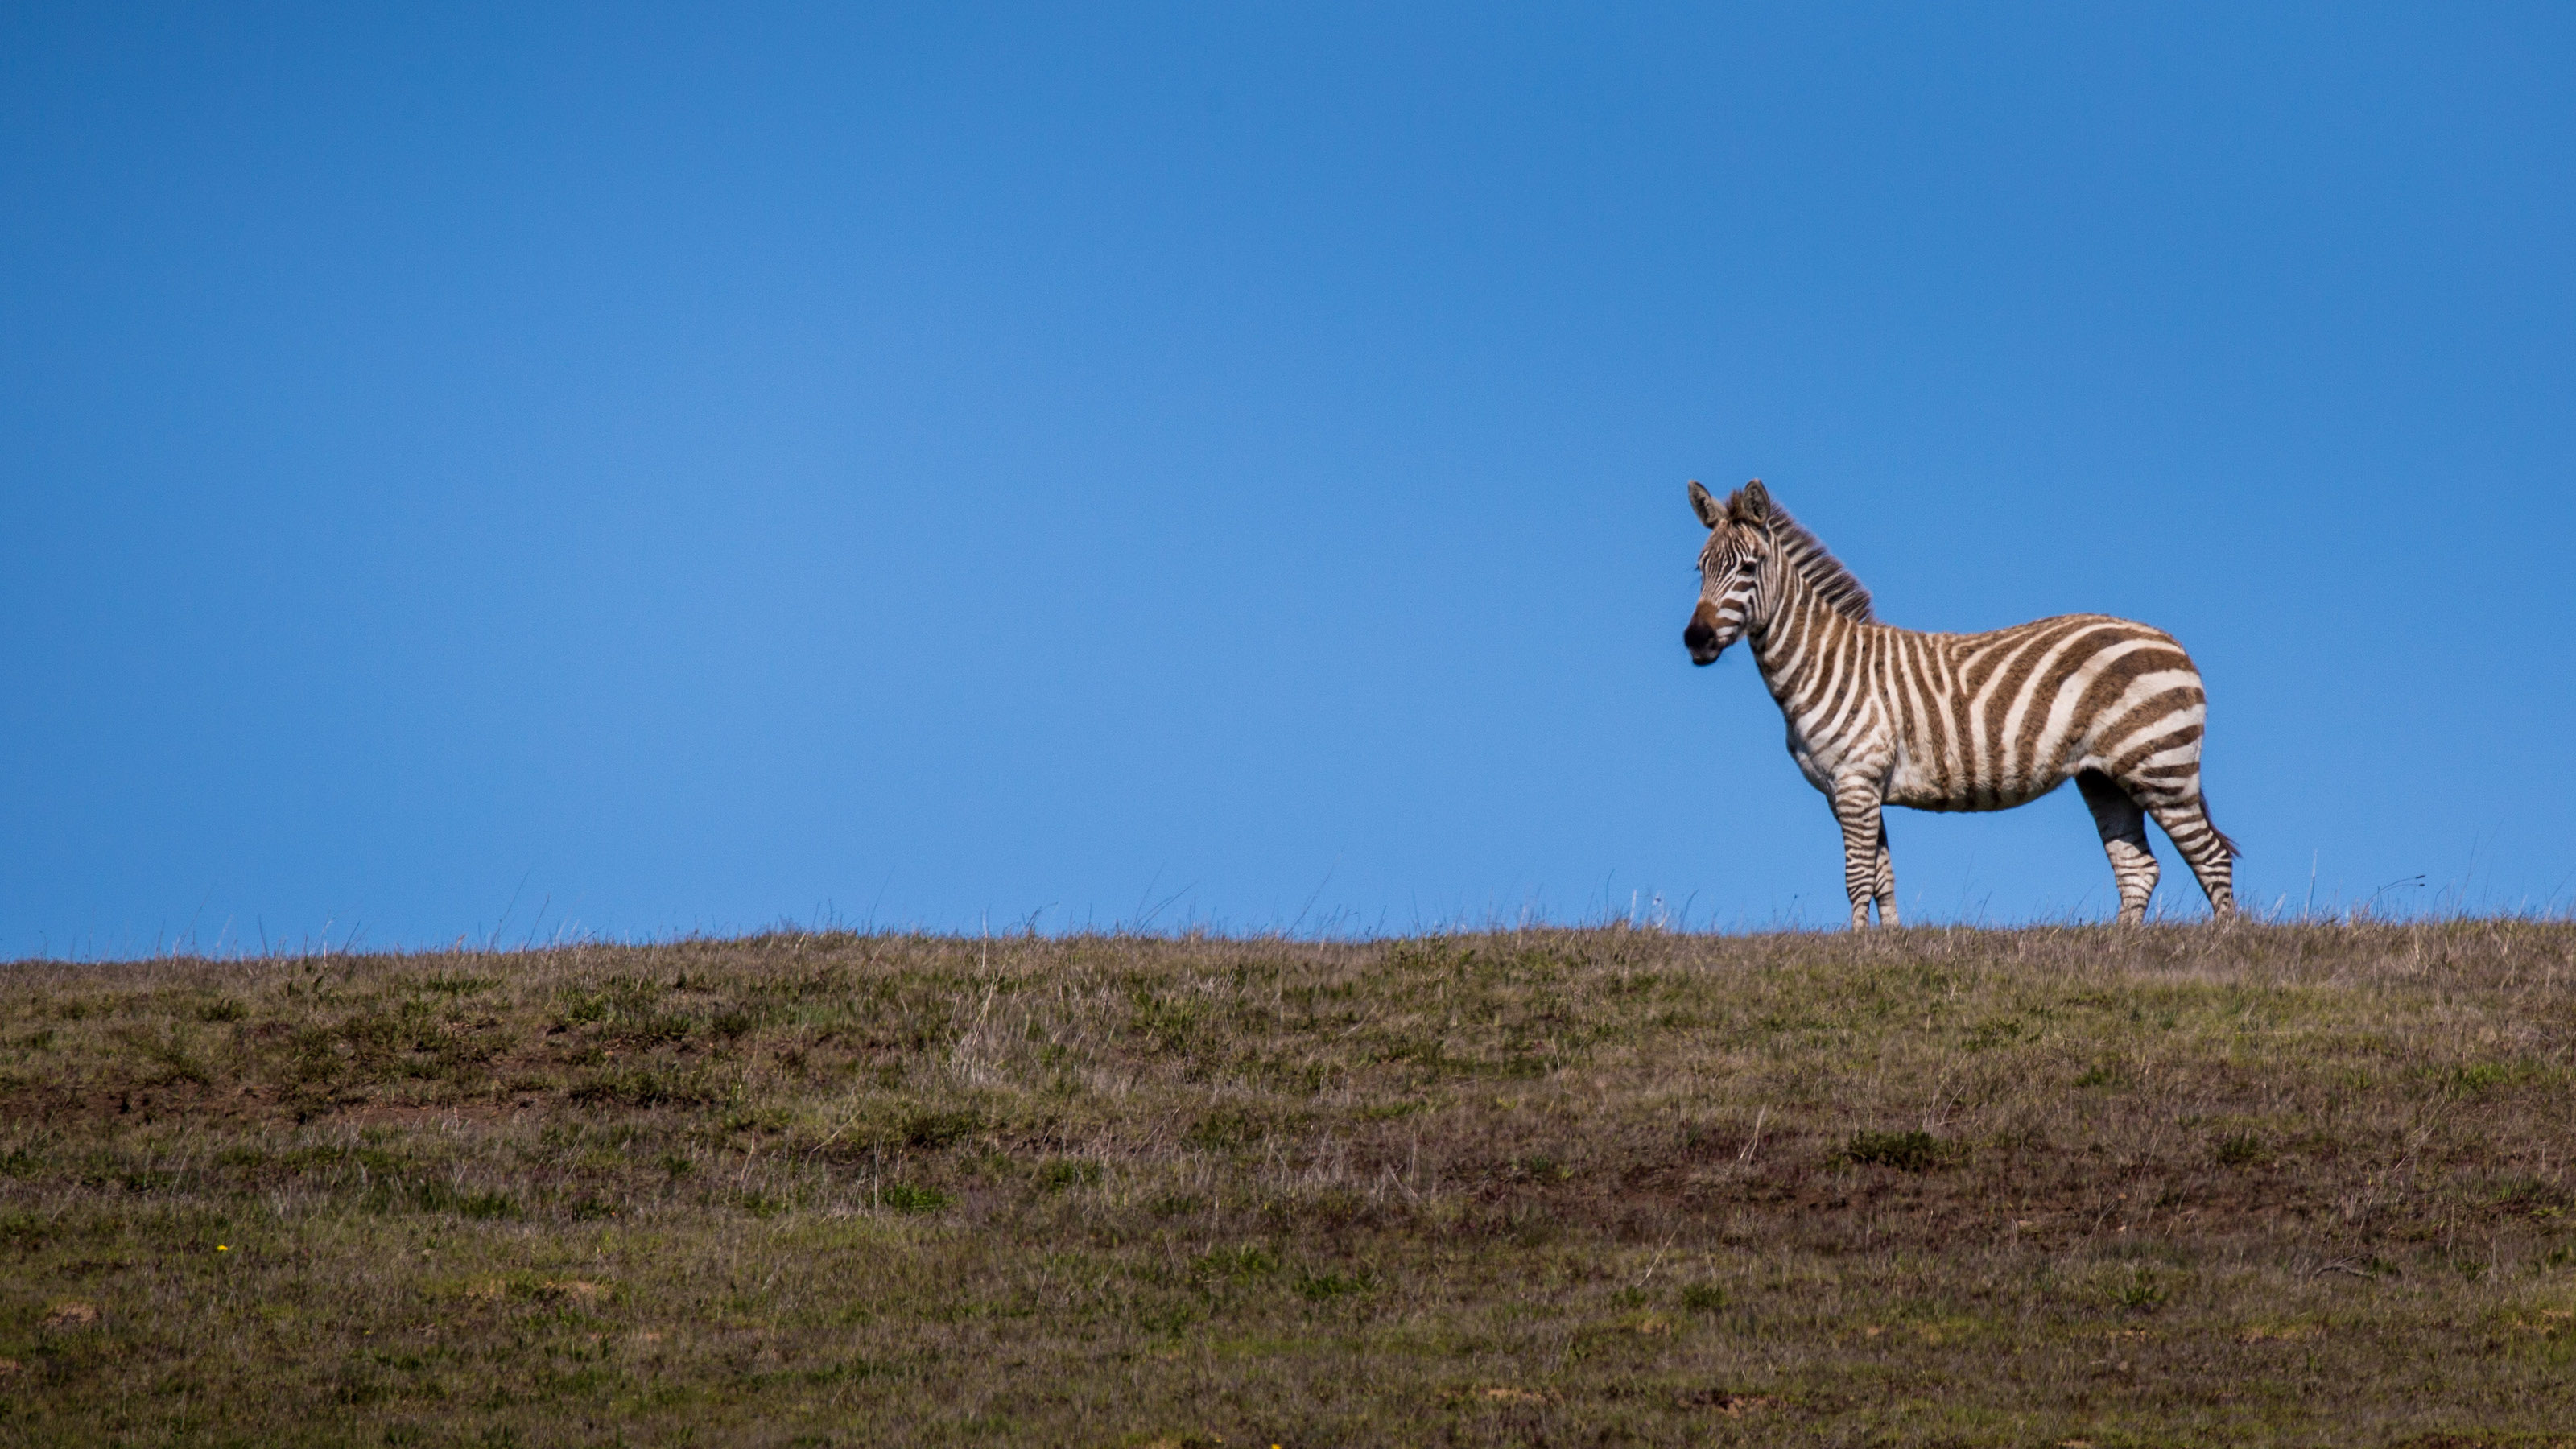 Why California has wild zebras